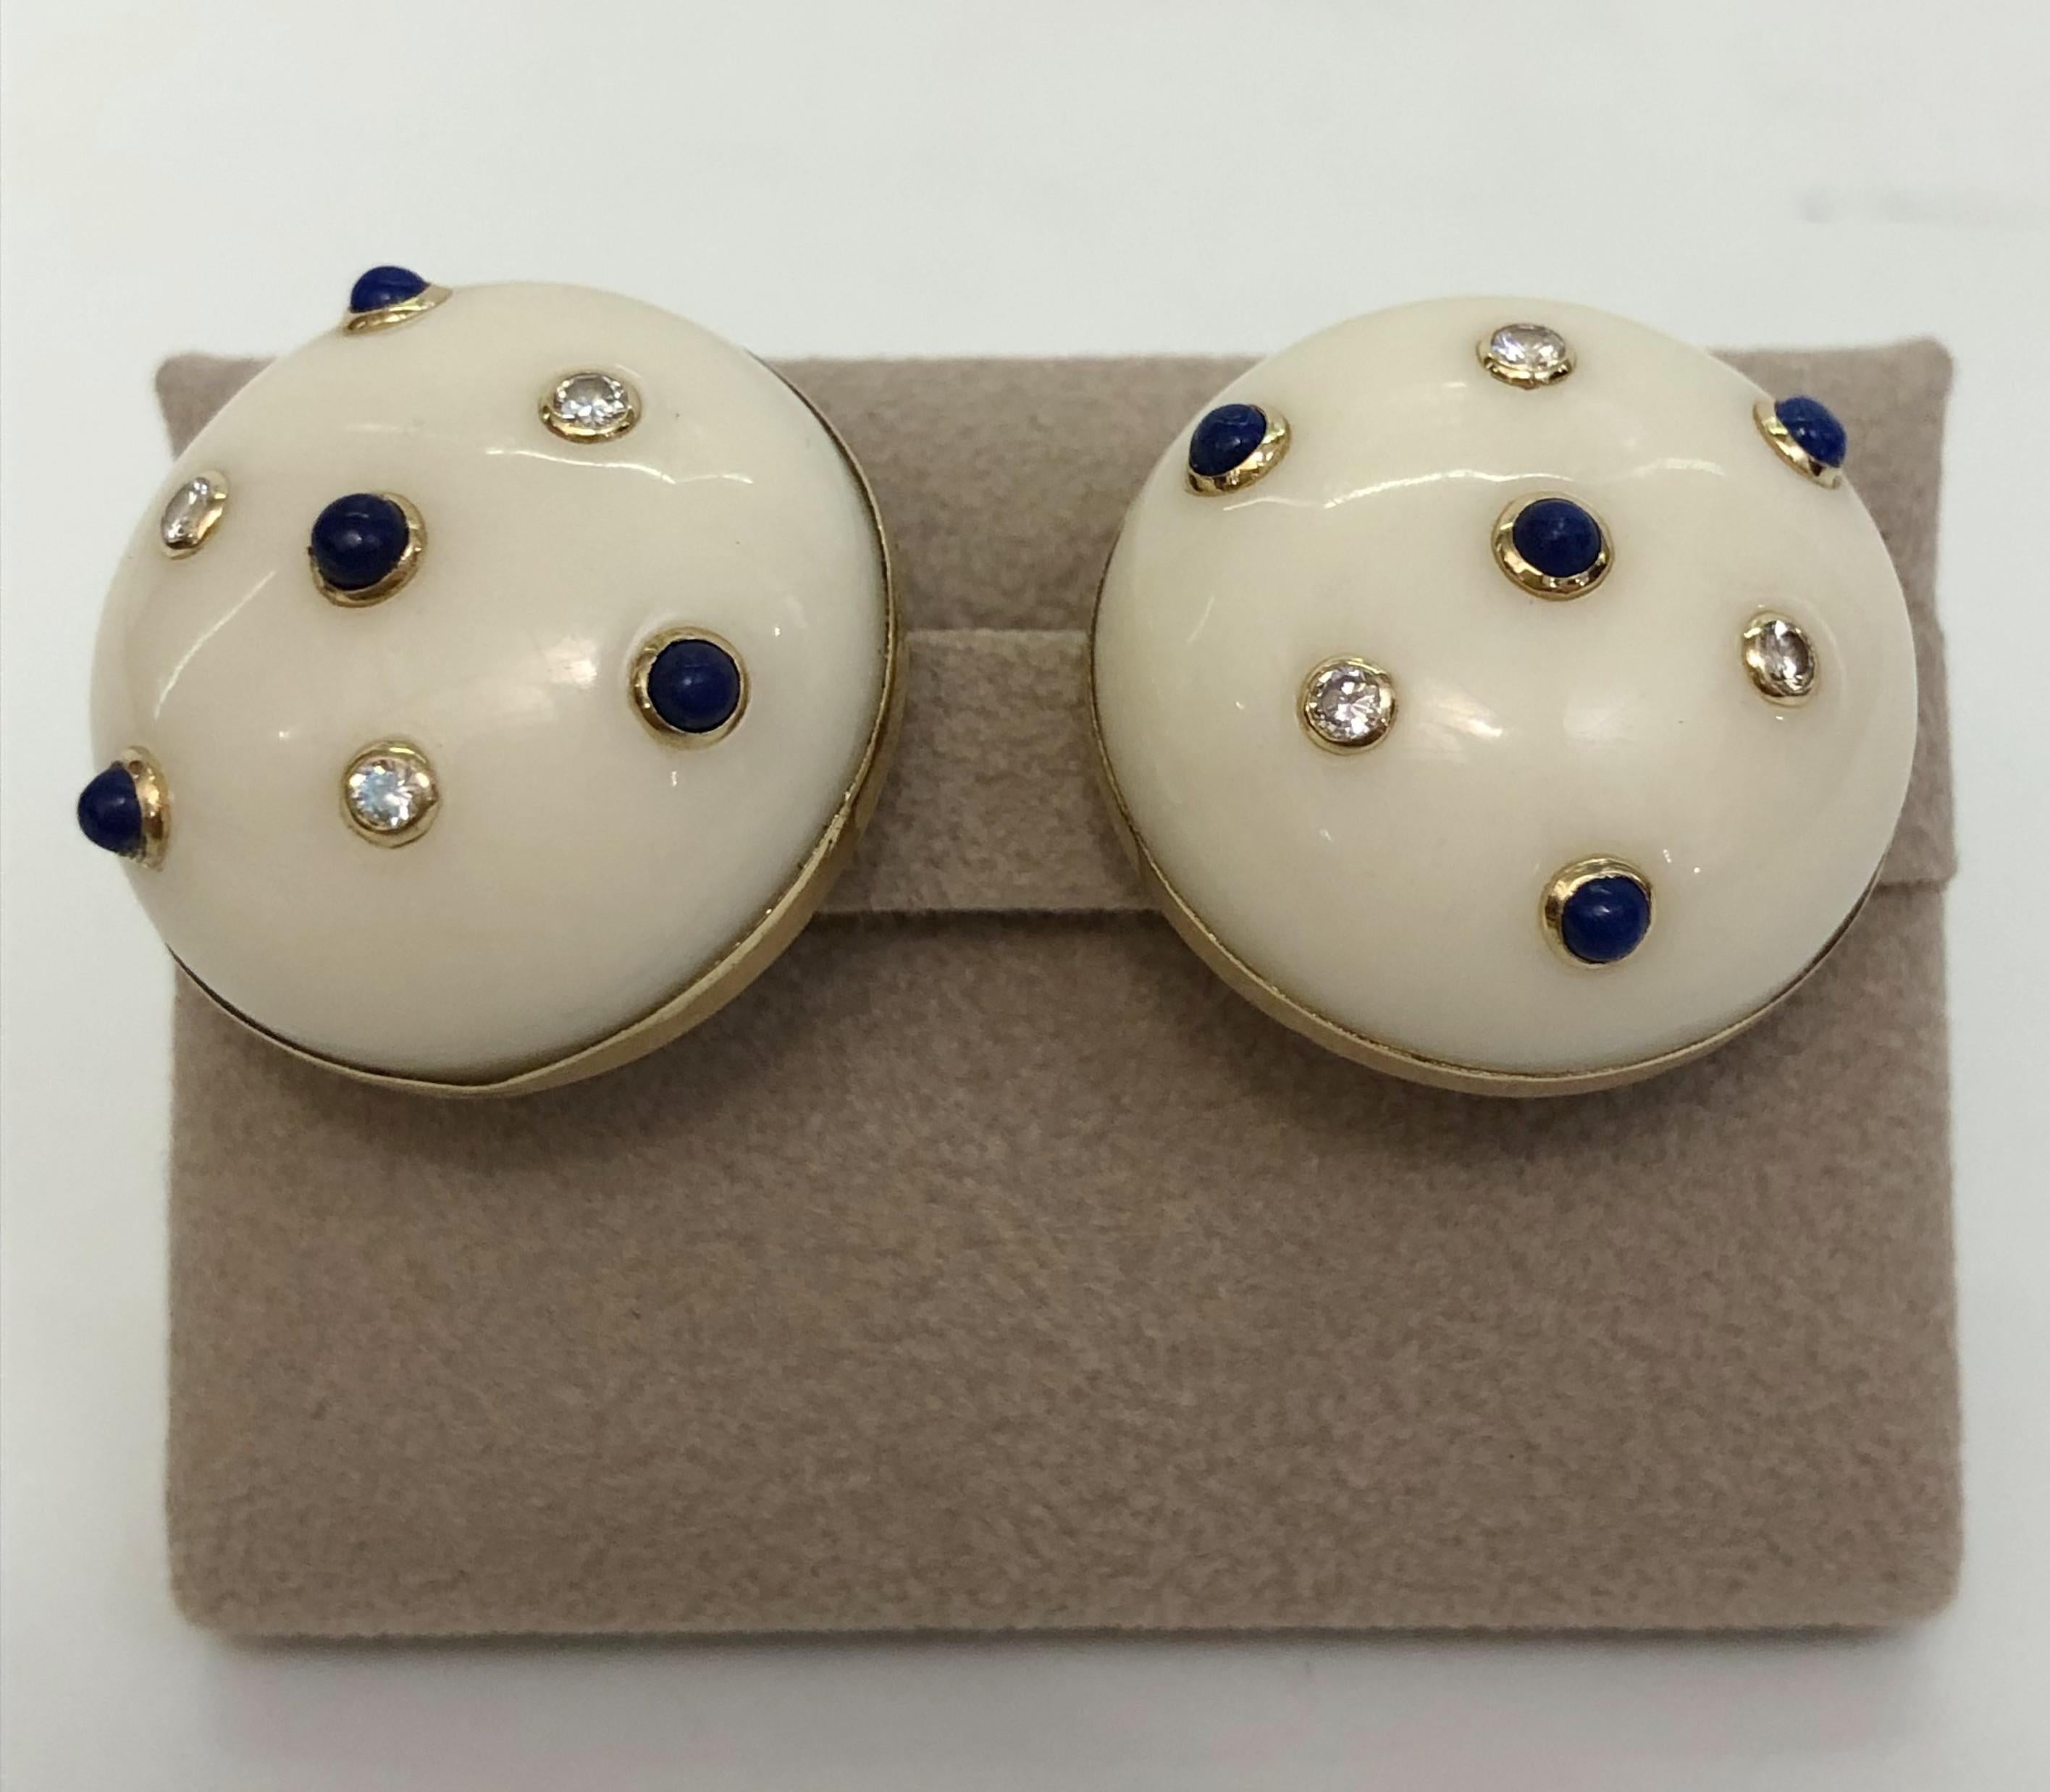 Pair of vintage 18 karat yellow gold earrings with white agate, lapis lazuli and diamonds / Italy 1980s
marked TRIANON
Diameter 2.4cm